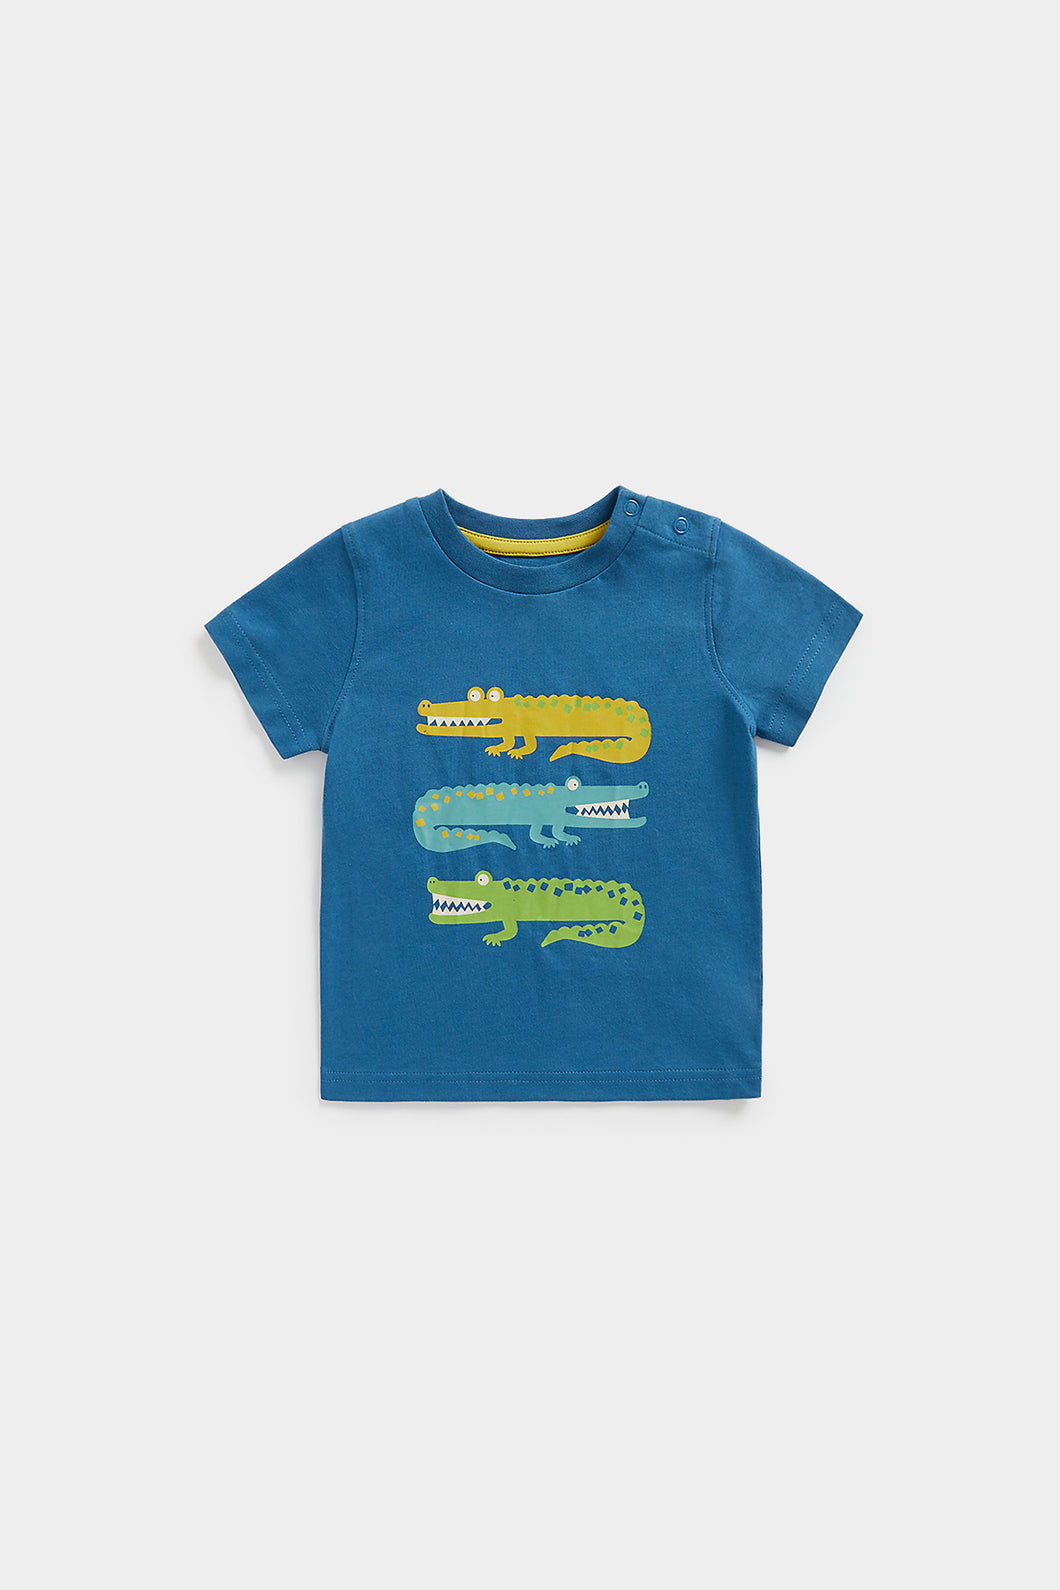 Mothercare Crocodile T-Shirt